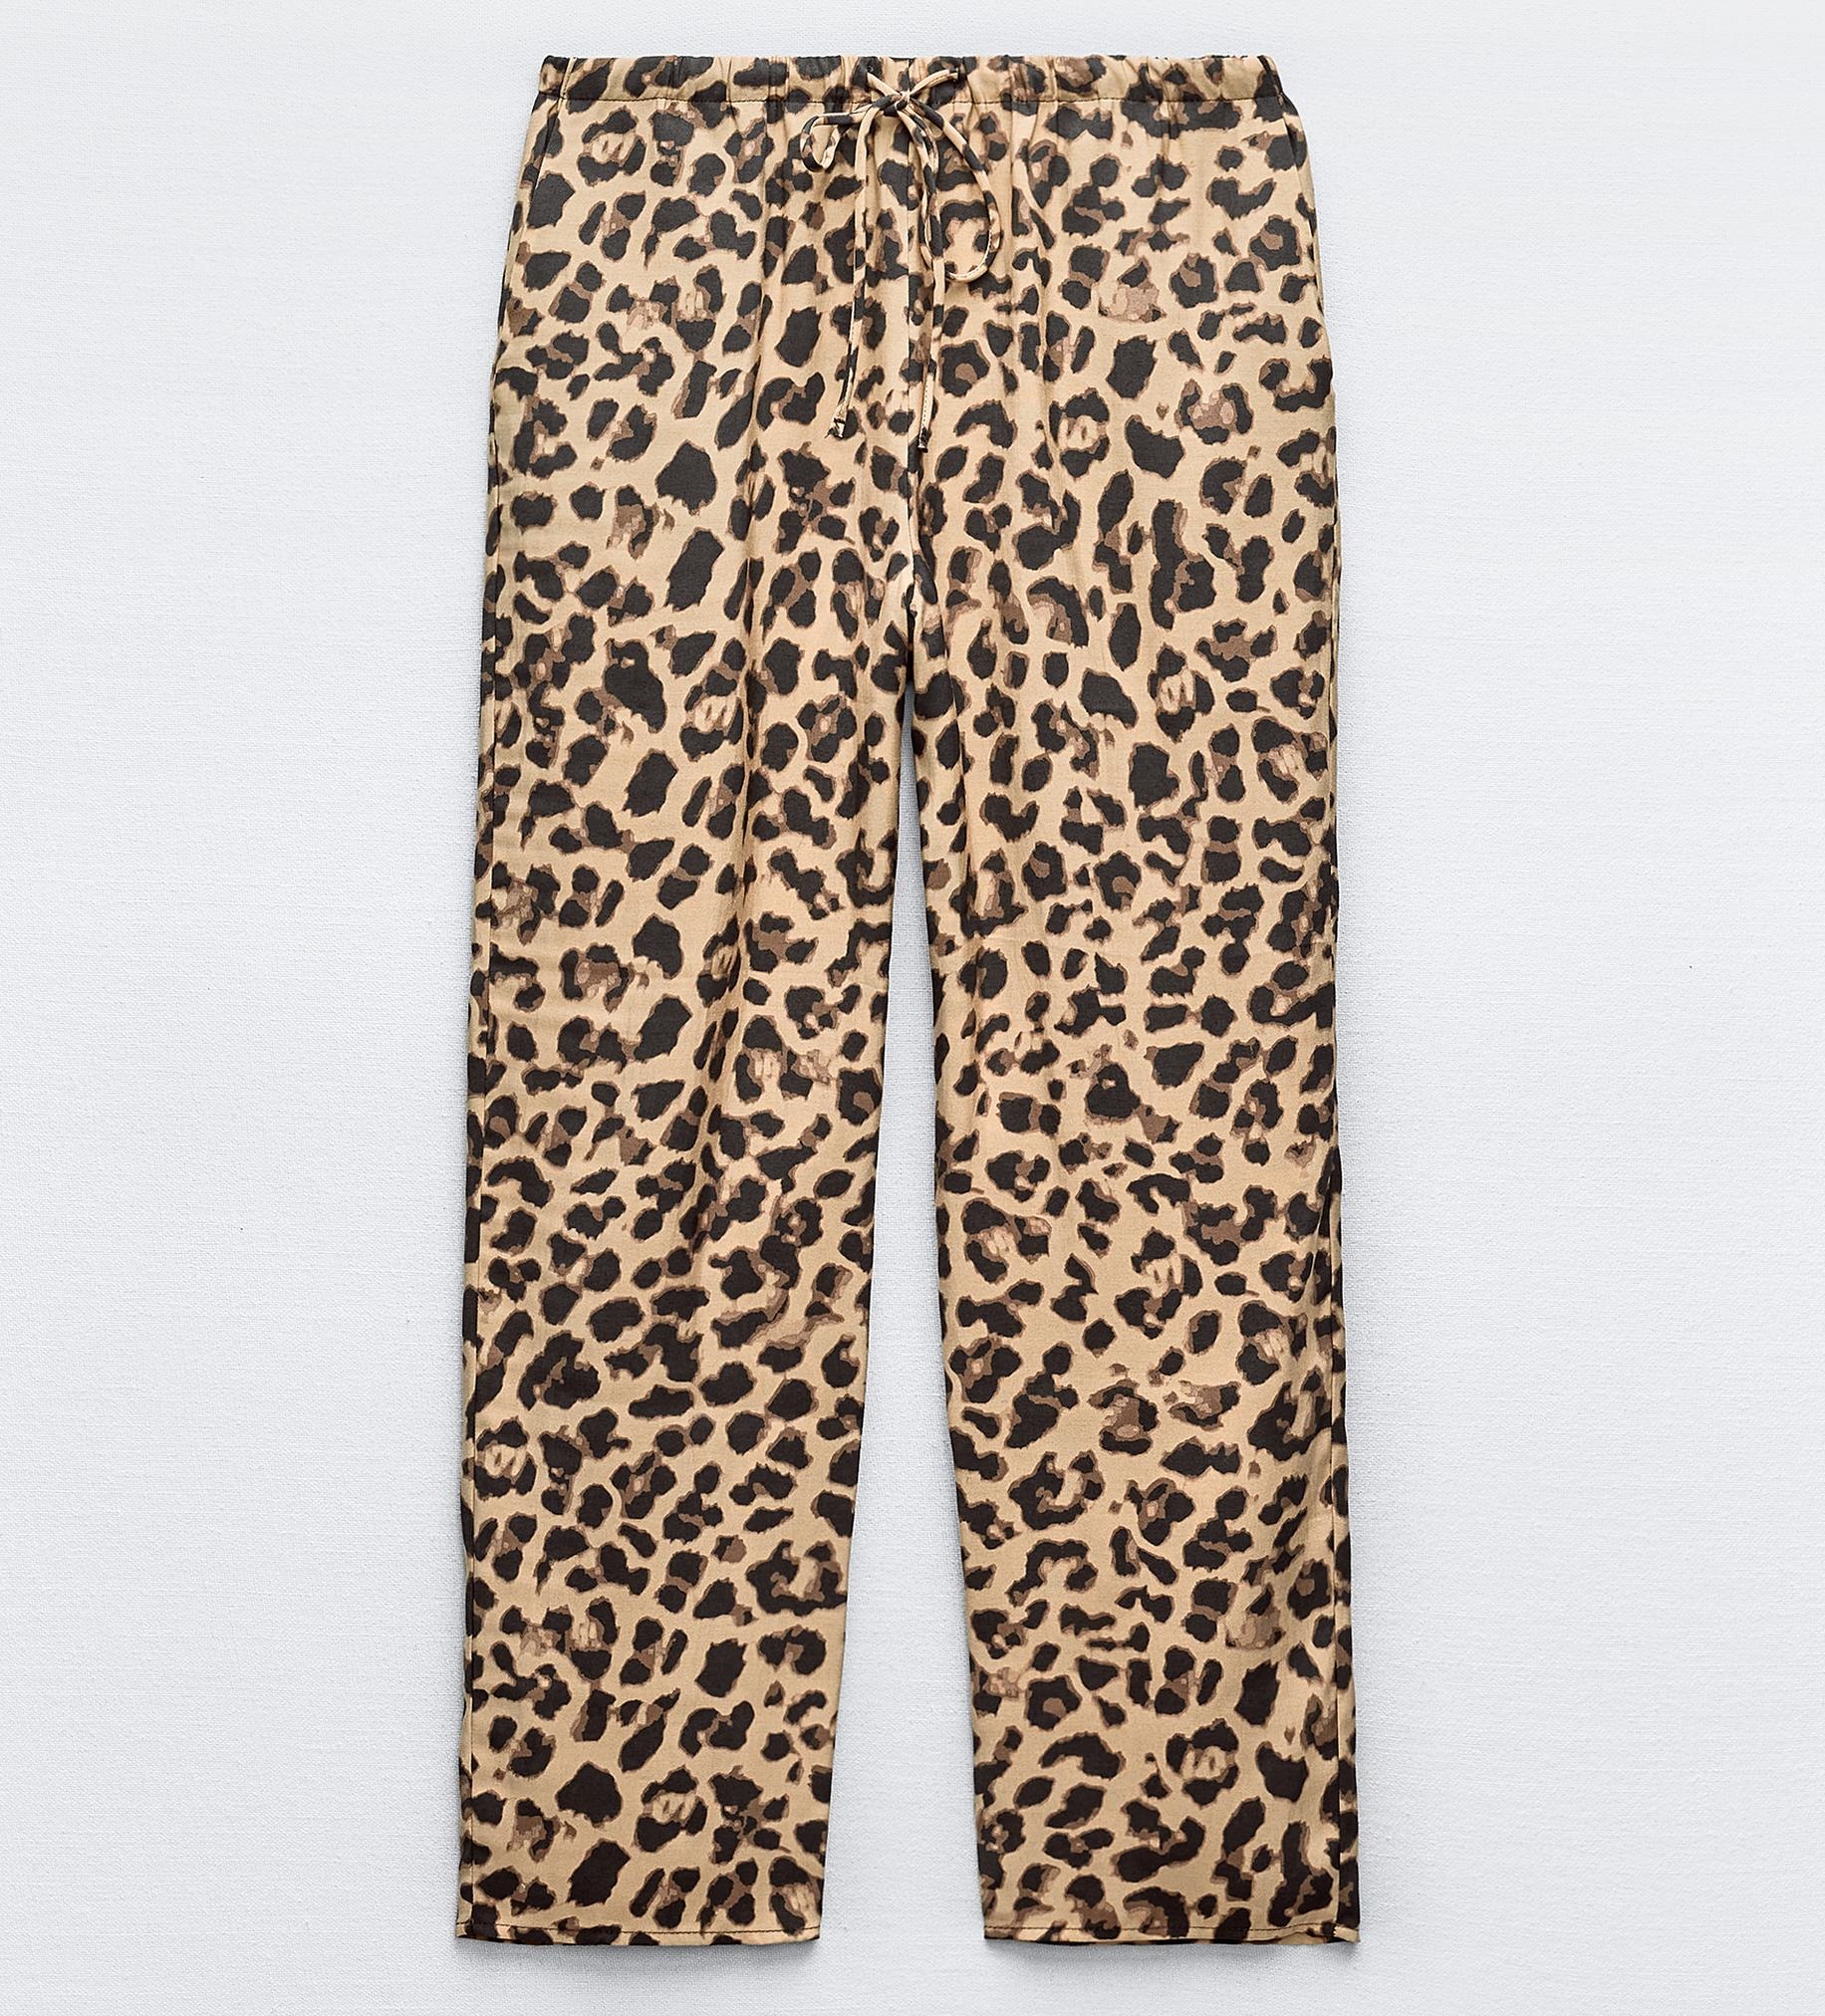 Брюки Zara Animal Print, коричневый платье zara satin leopard animal print коричневый мультиколор